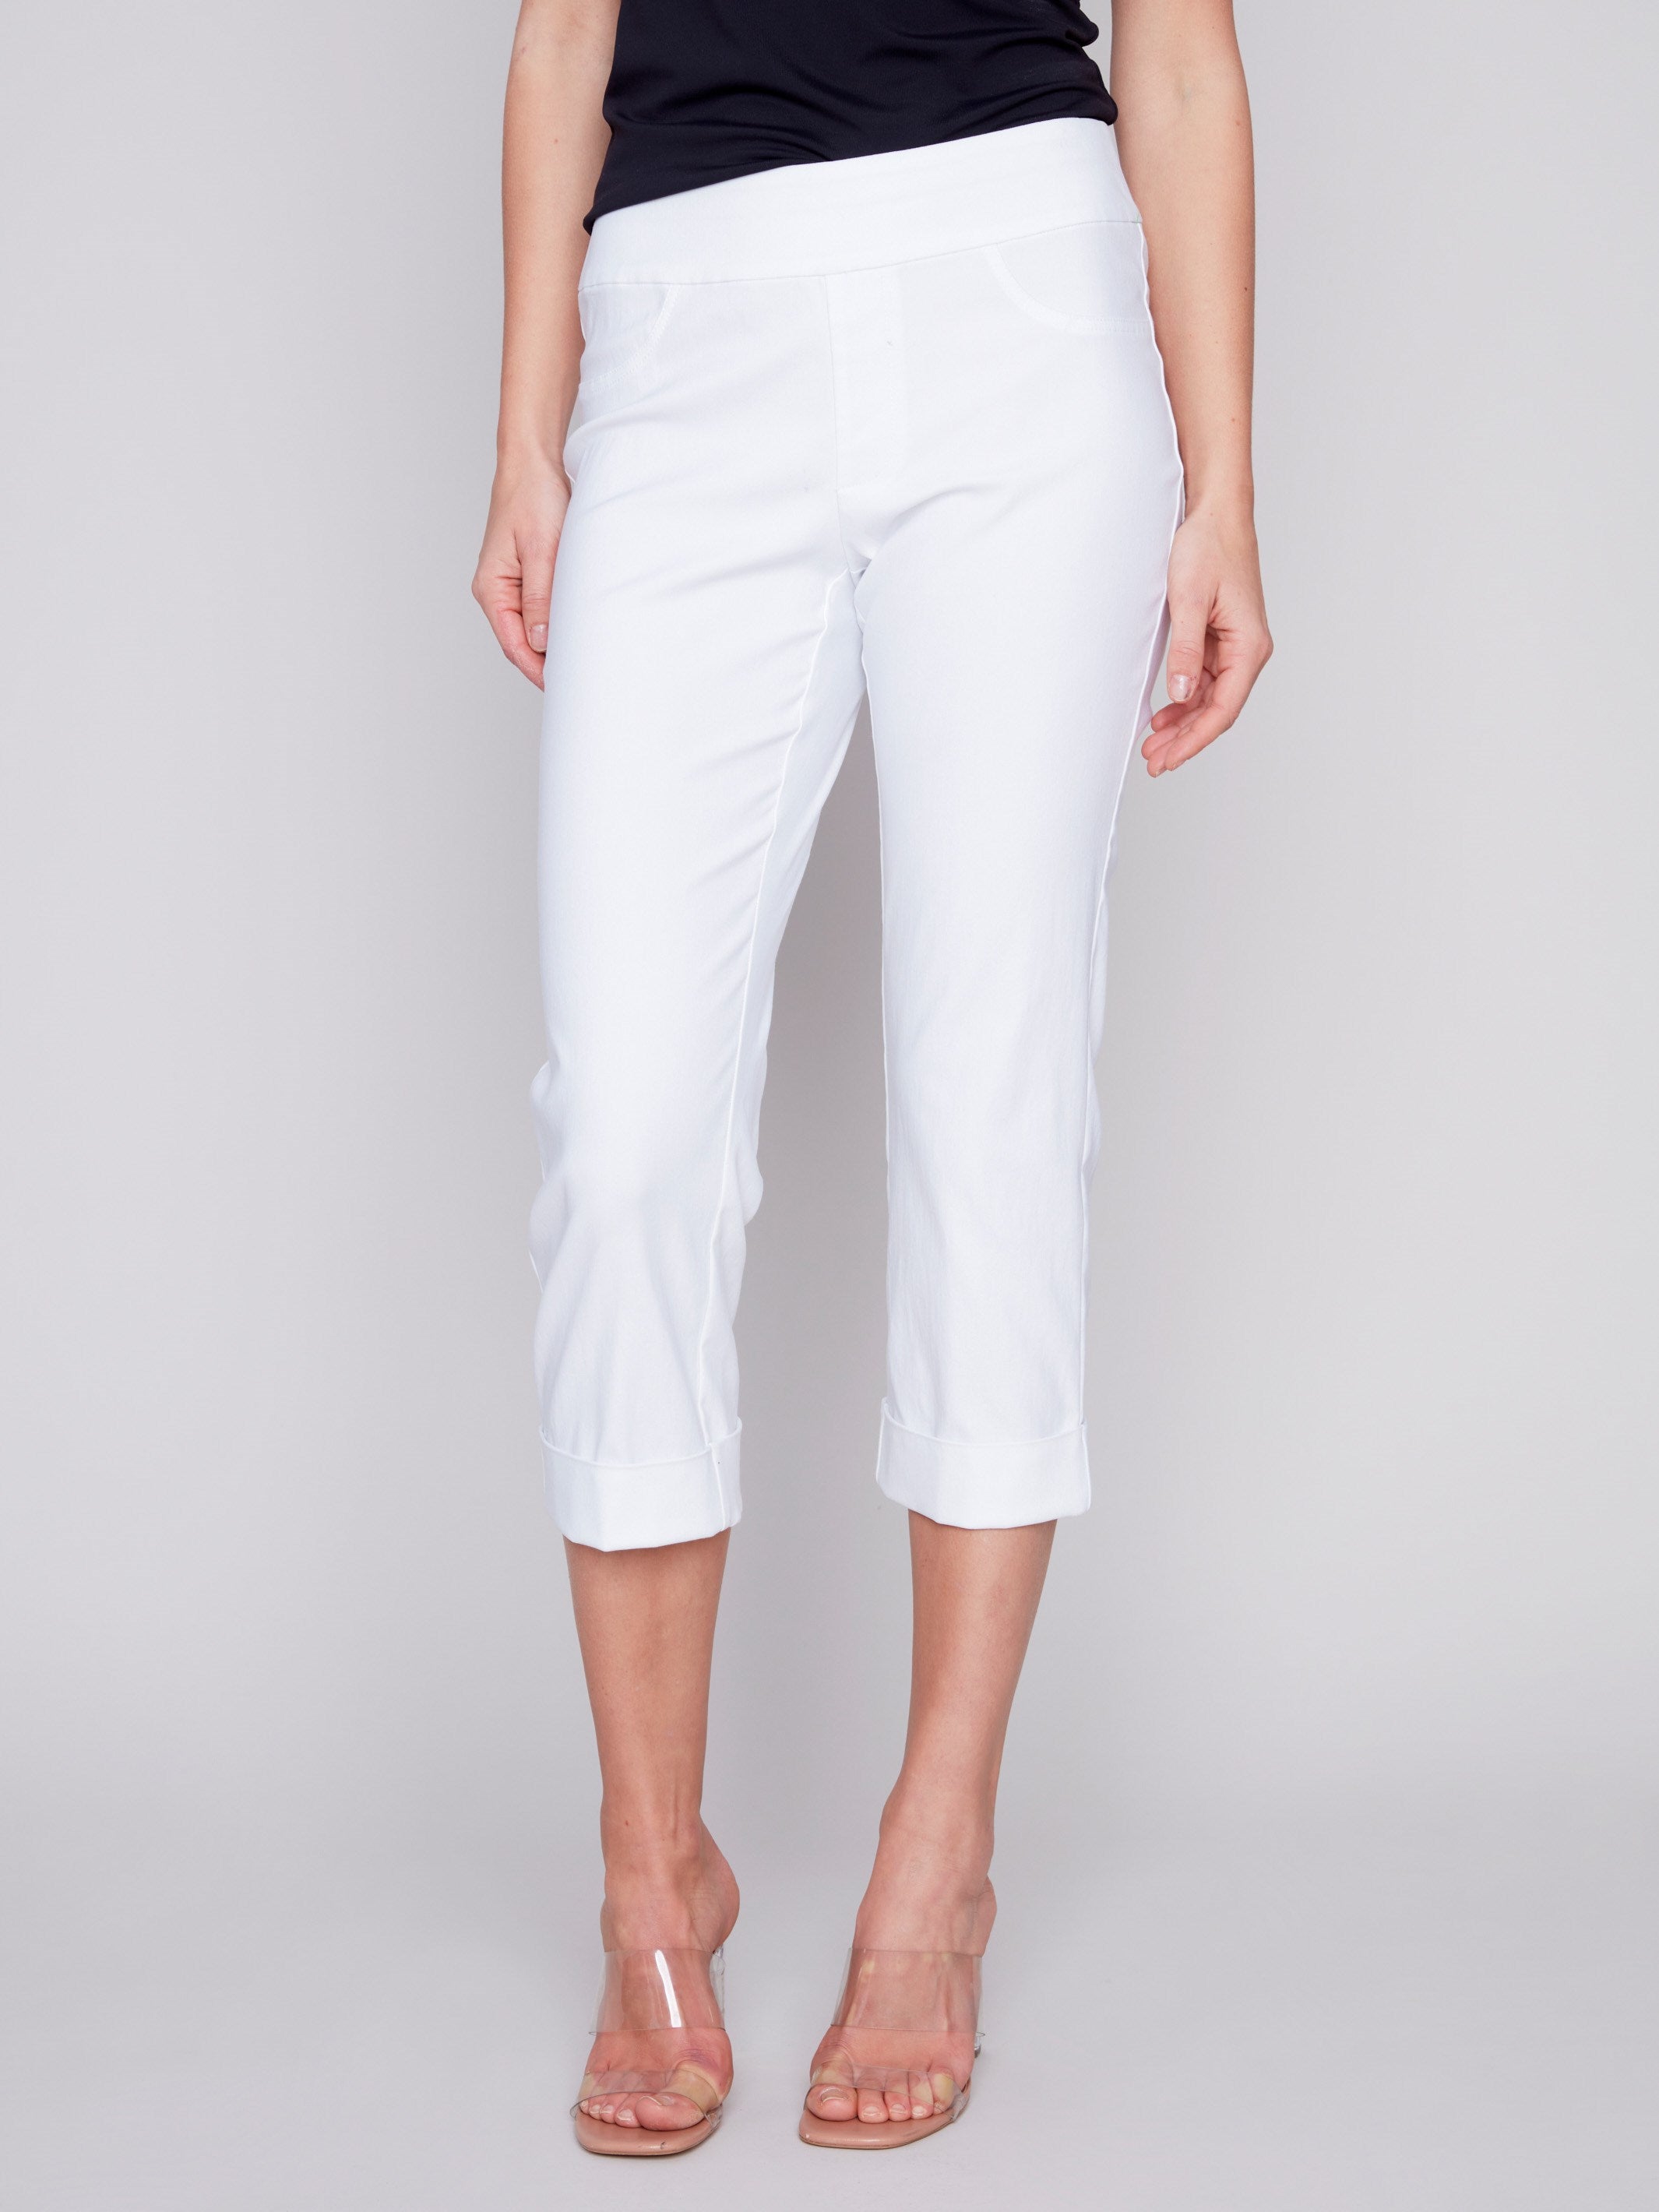 Women's Stretch Pull-On Capri Pants, White